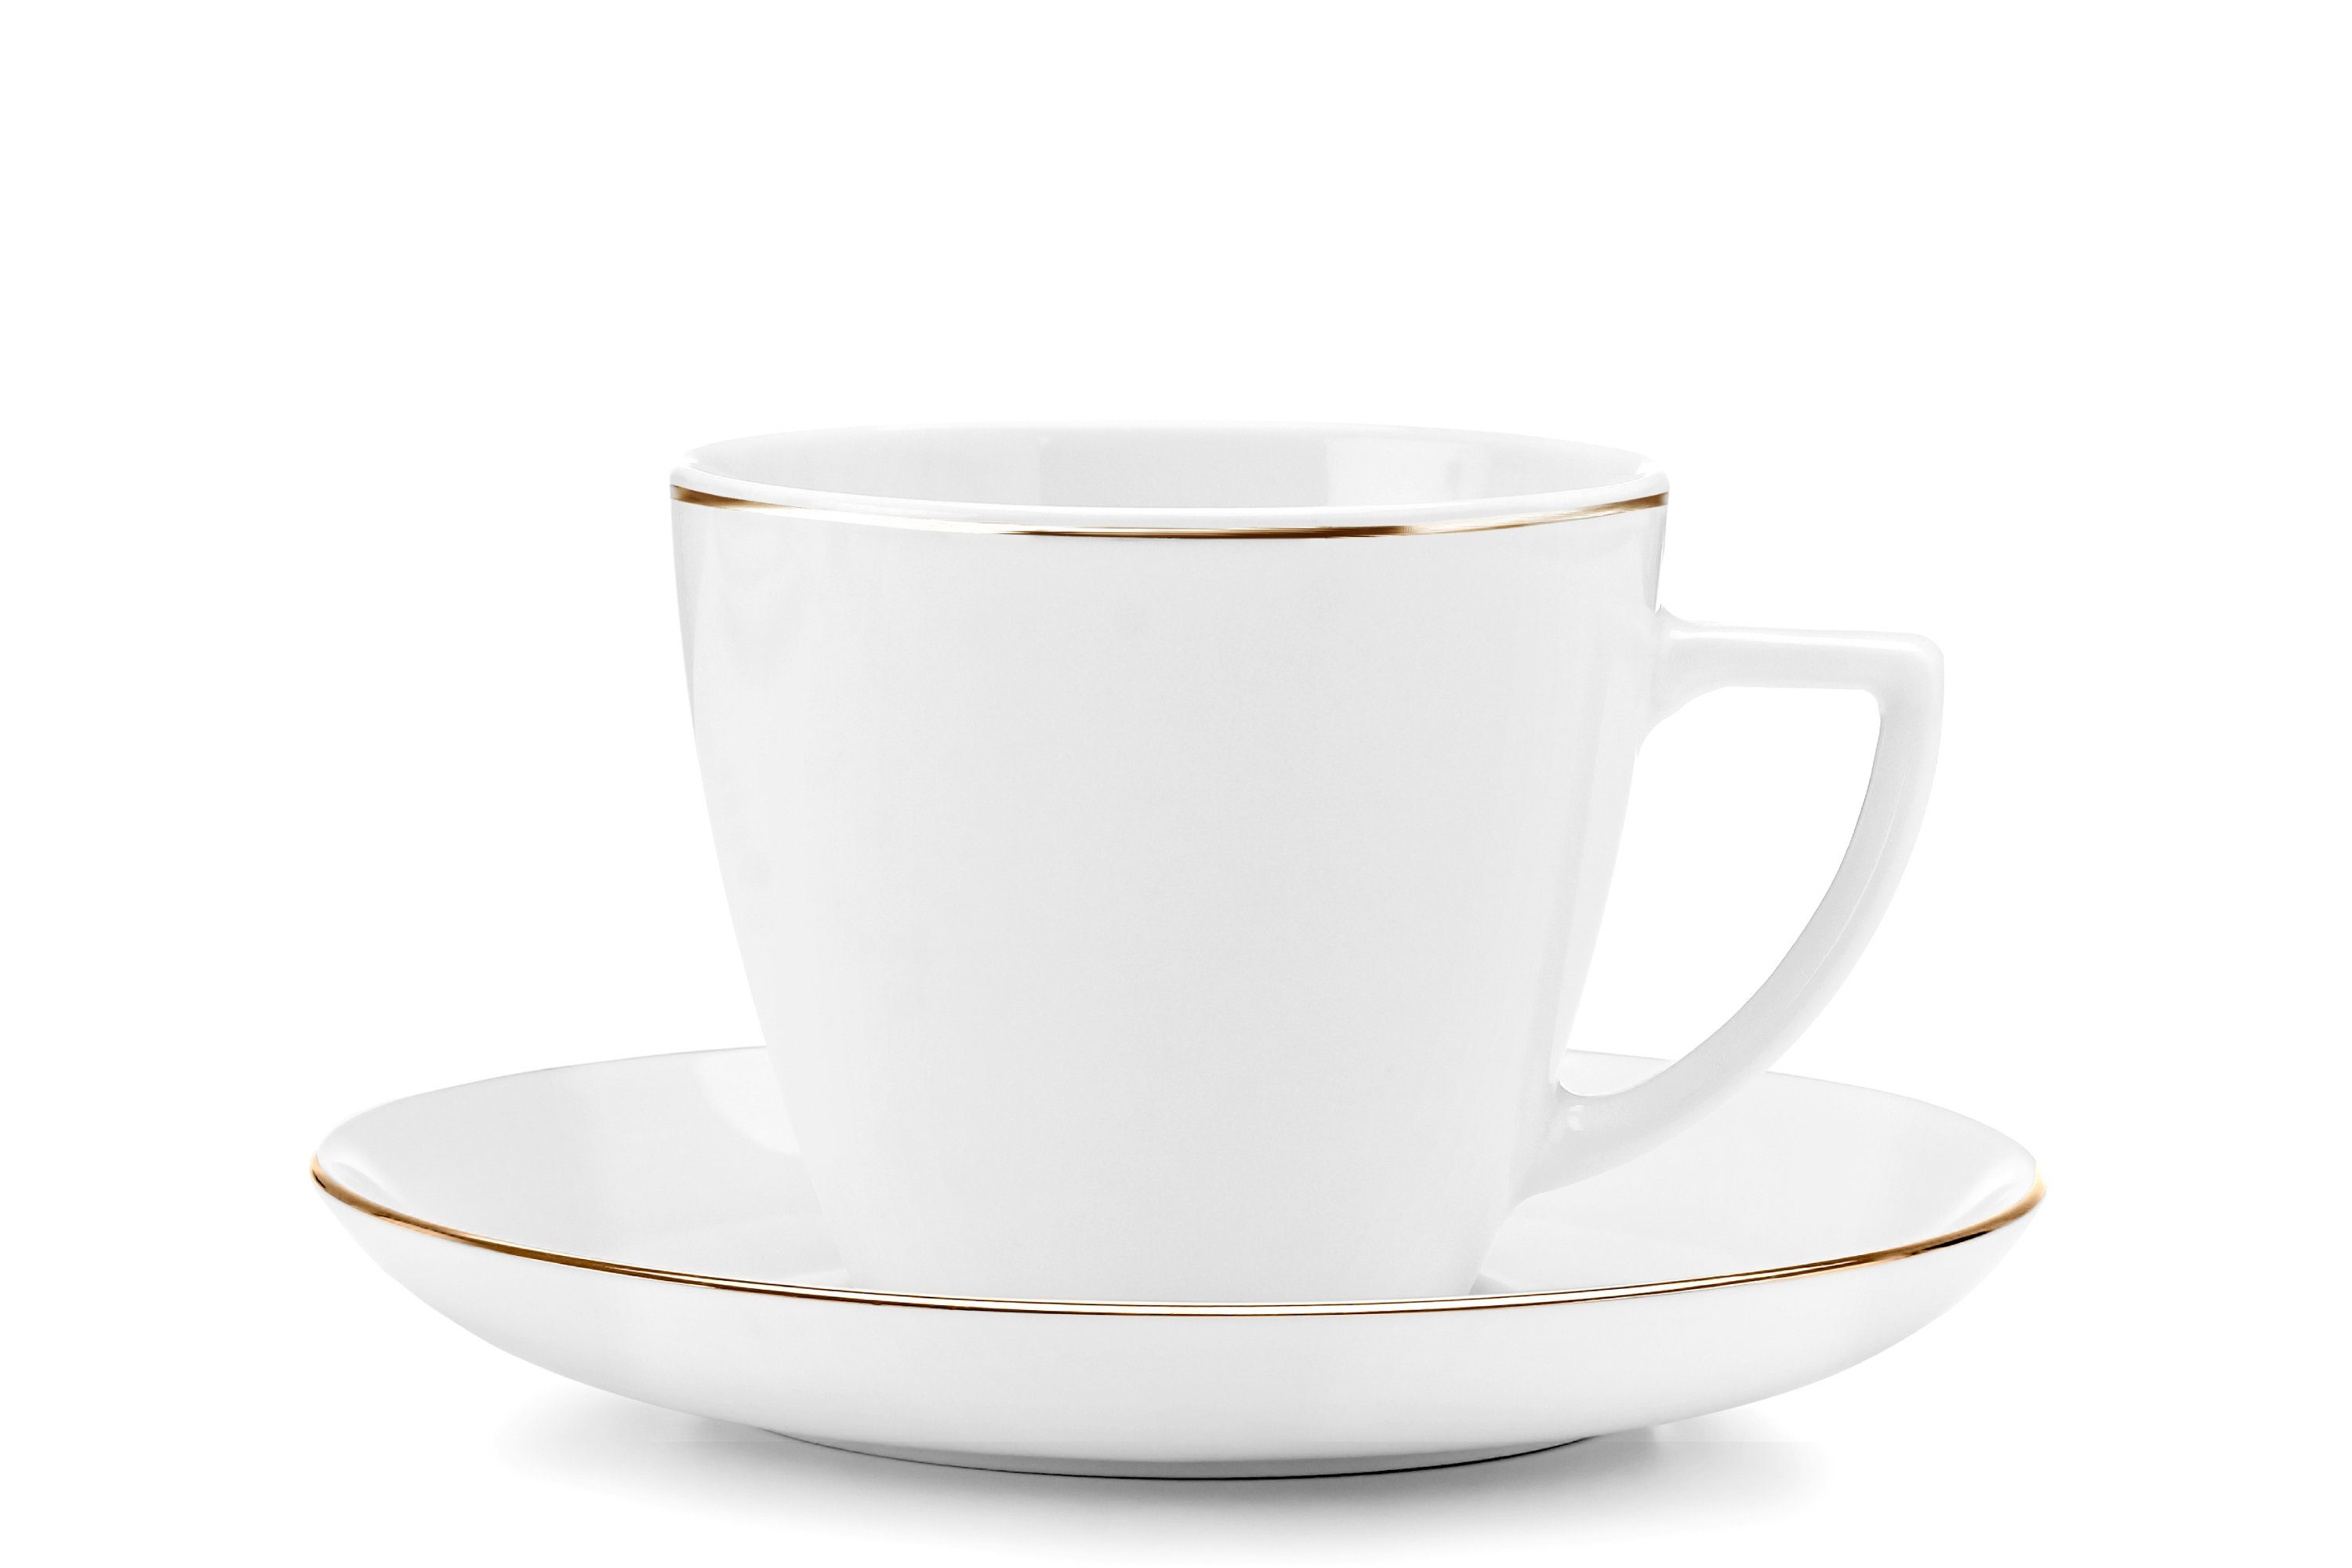 Konsimo Kaffeeservice BOSS Tassen & rund, Weiß/Gold Personen, (12-tlg), 350ml Porzellan, 6 Untertassen